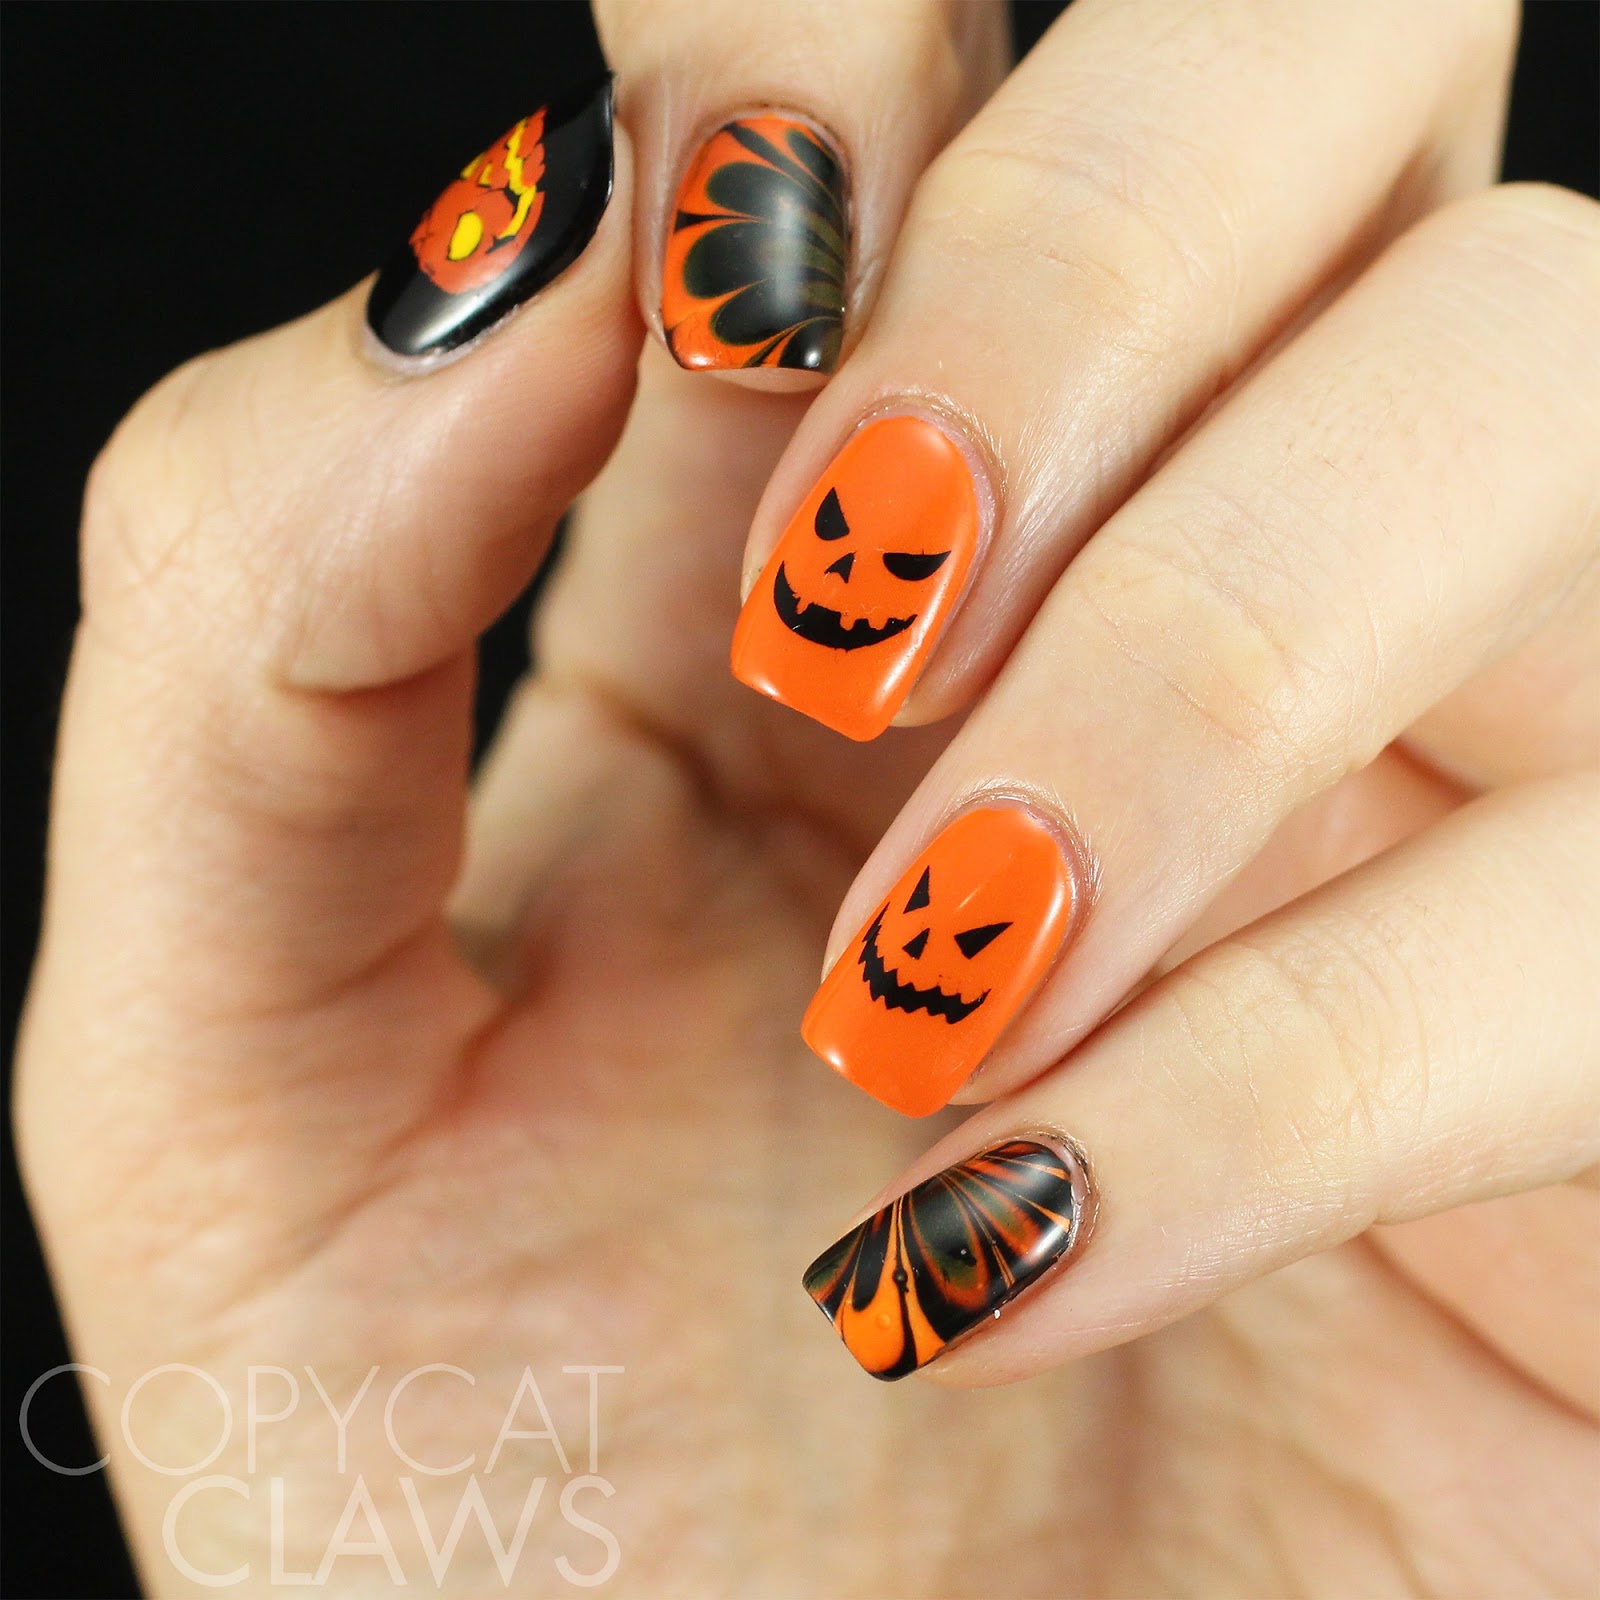 Copycat Claws: HPB Presents: My Final Halloween Nails